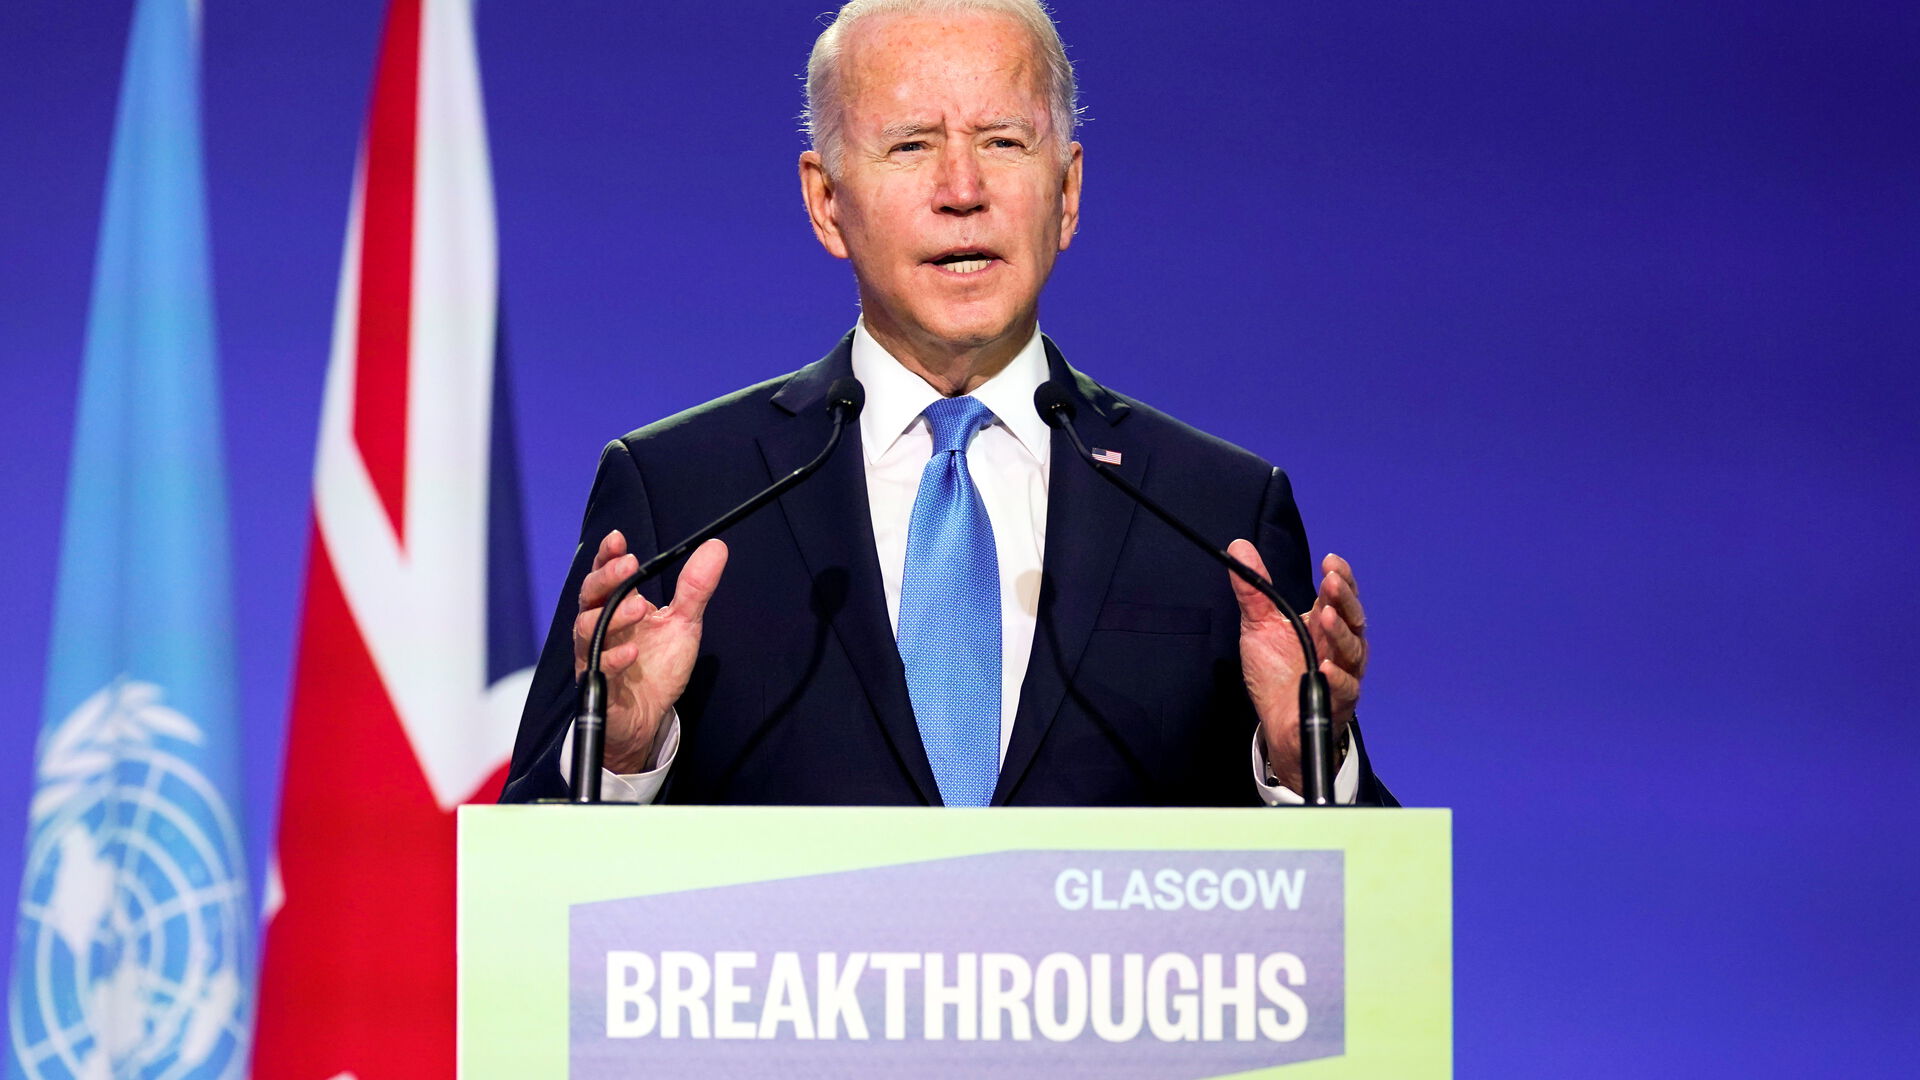 President Biden addressed deforestation and methane emissions at COP26.